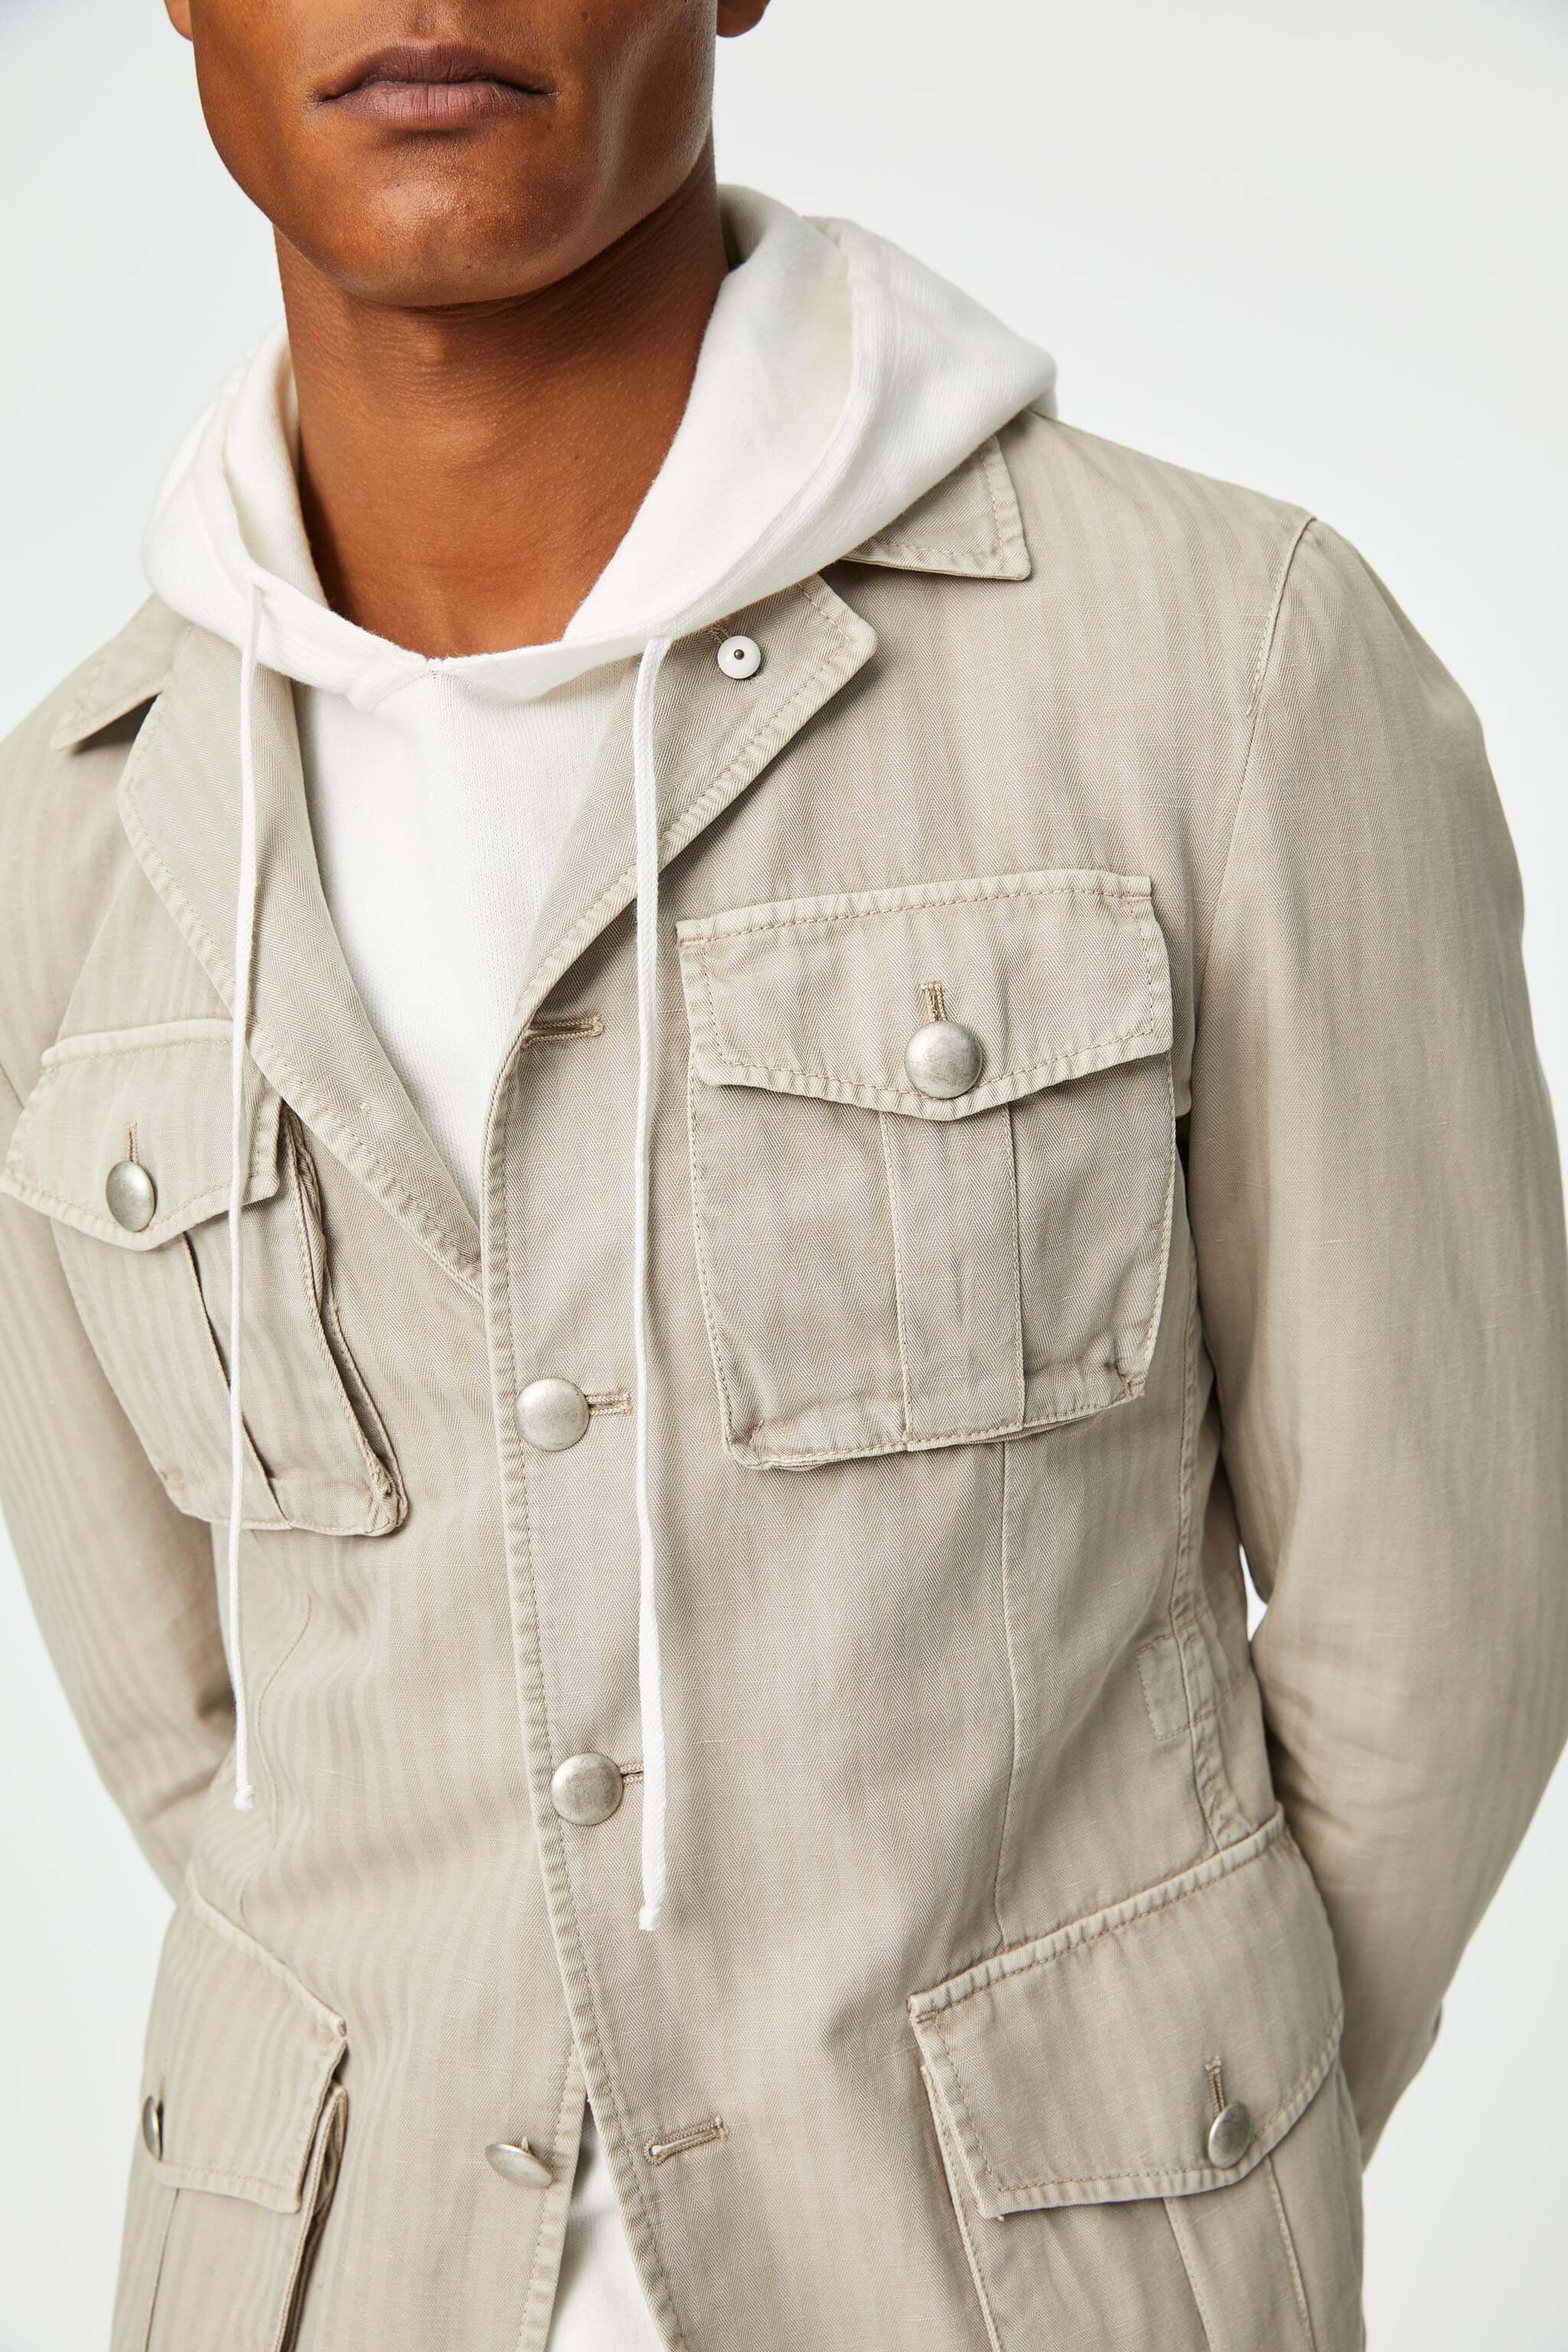 Garment-dyed SAHARA jacket in gray